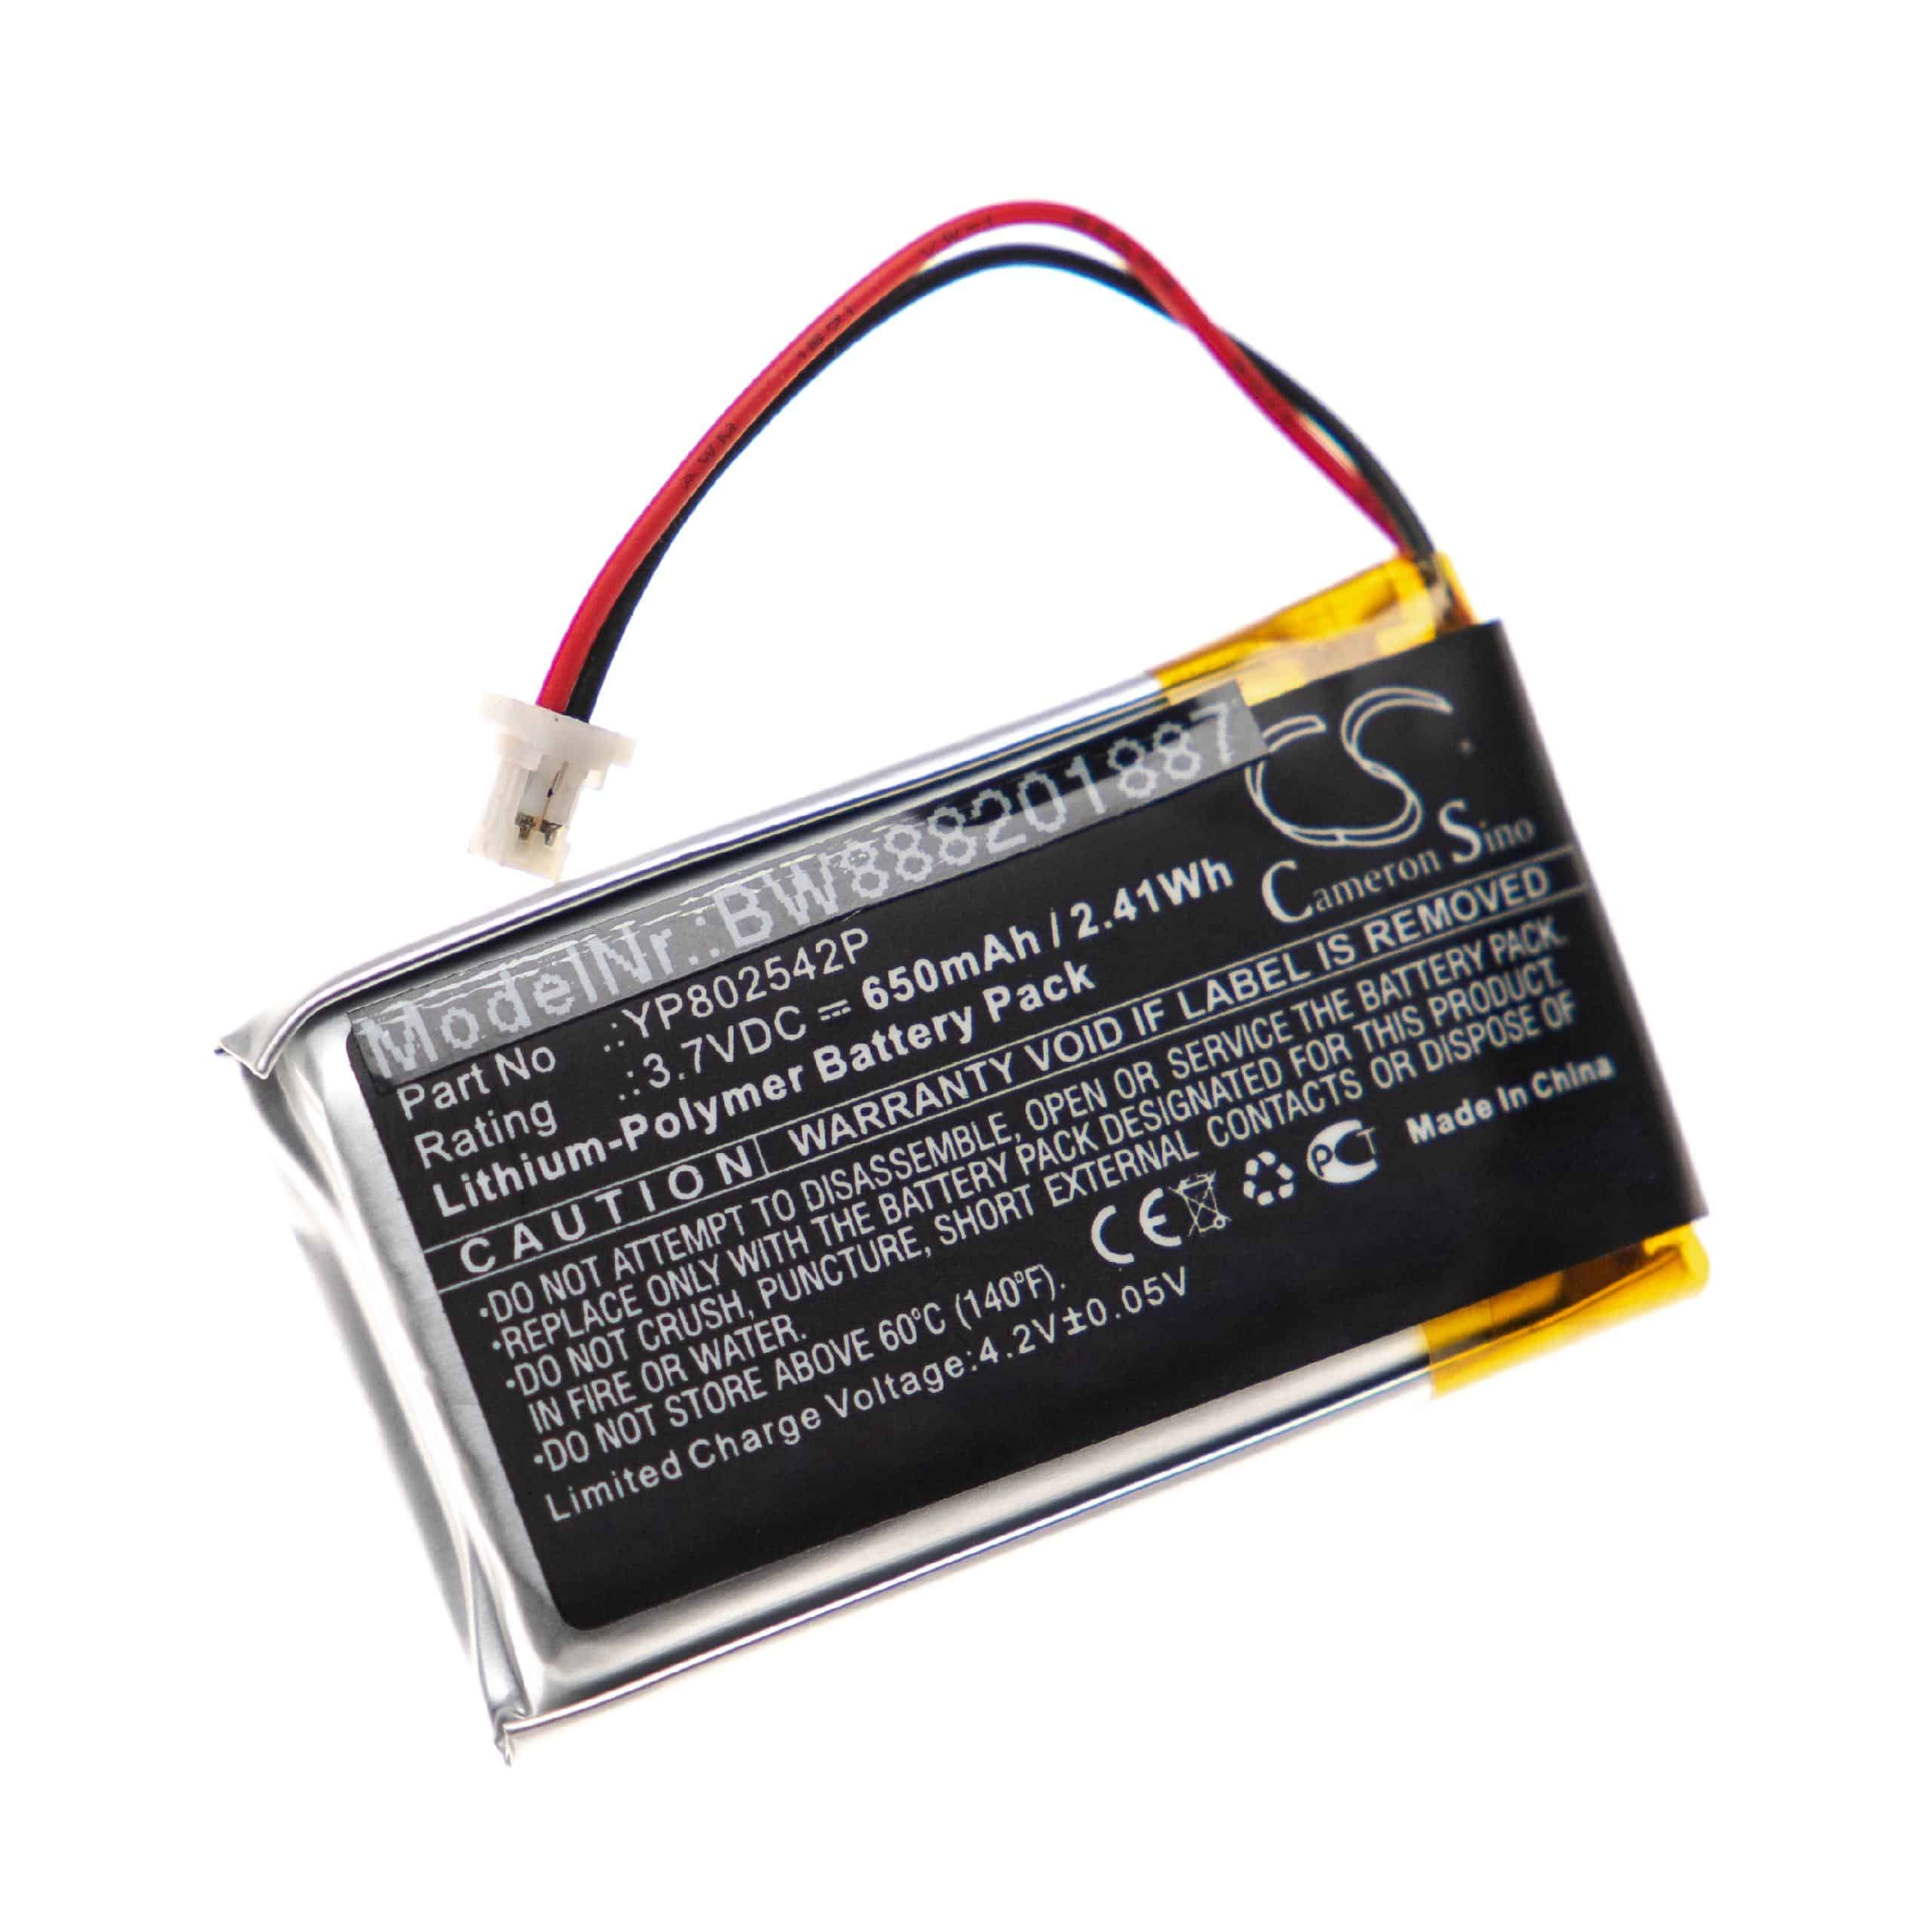 Wireless Headset Battery Replacement for Sena YP802542P - 650mAh 3.7V Li-polymer